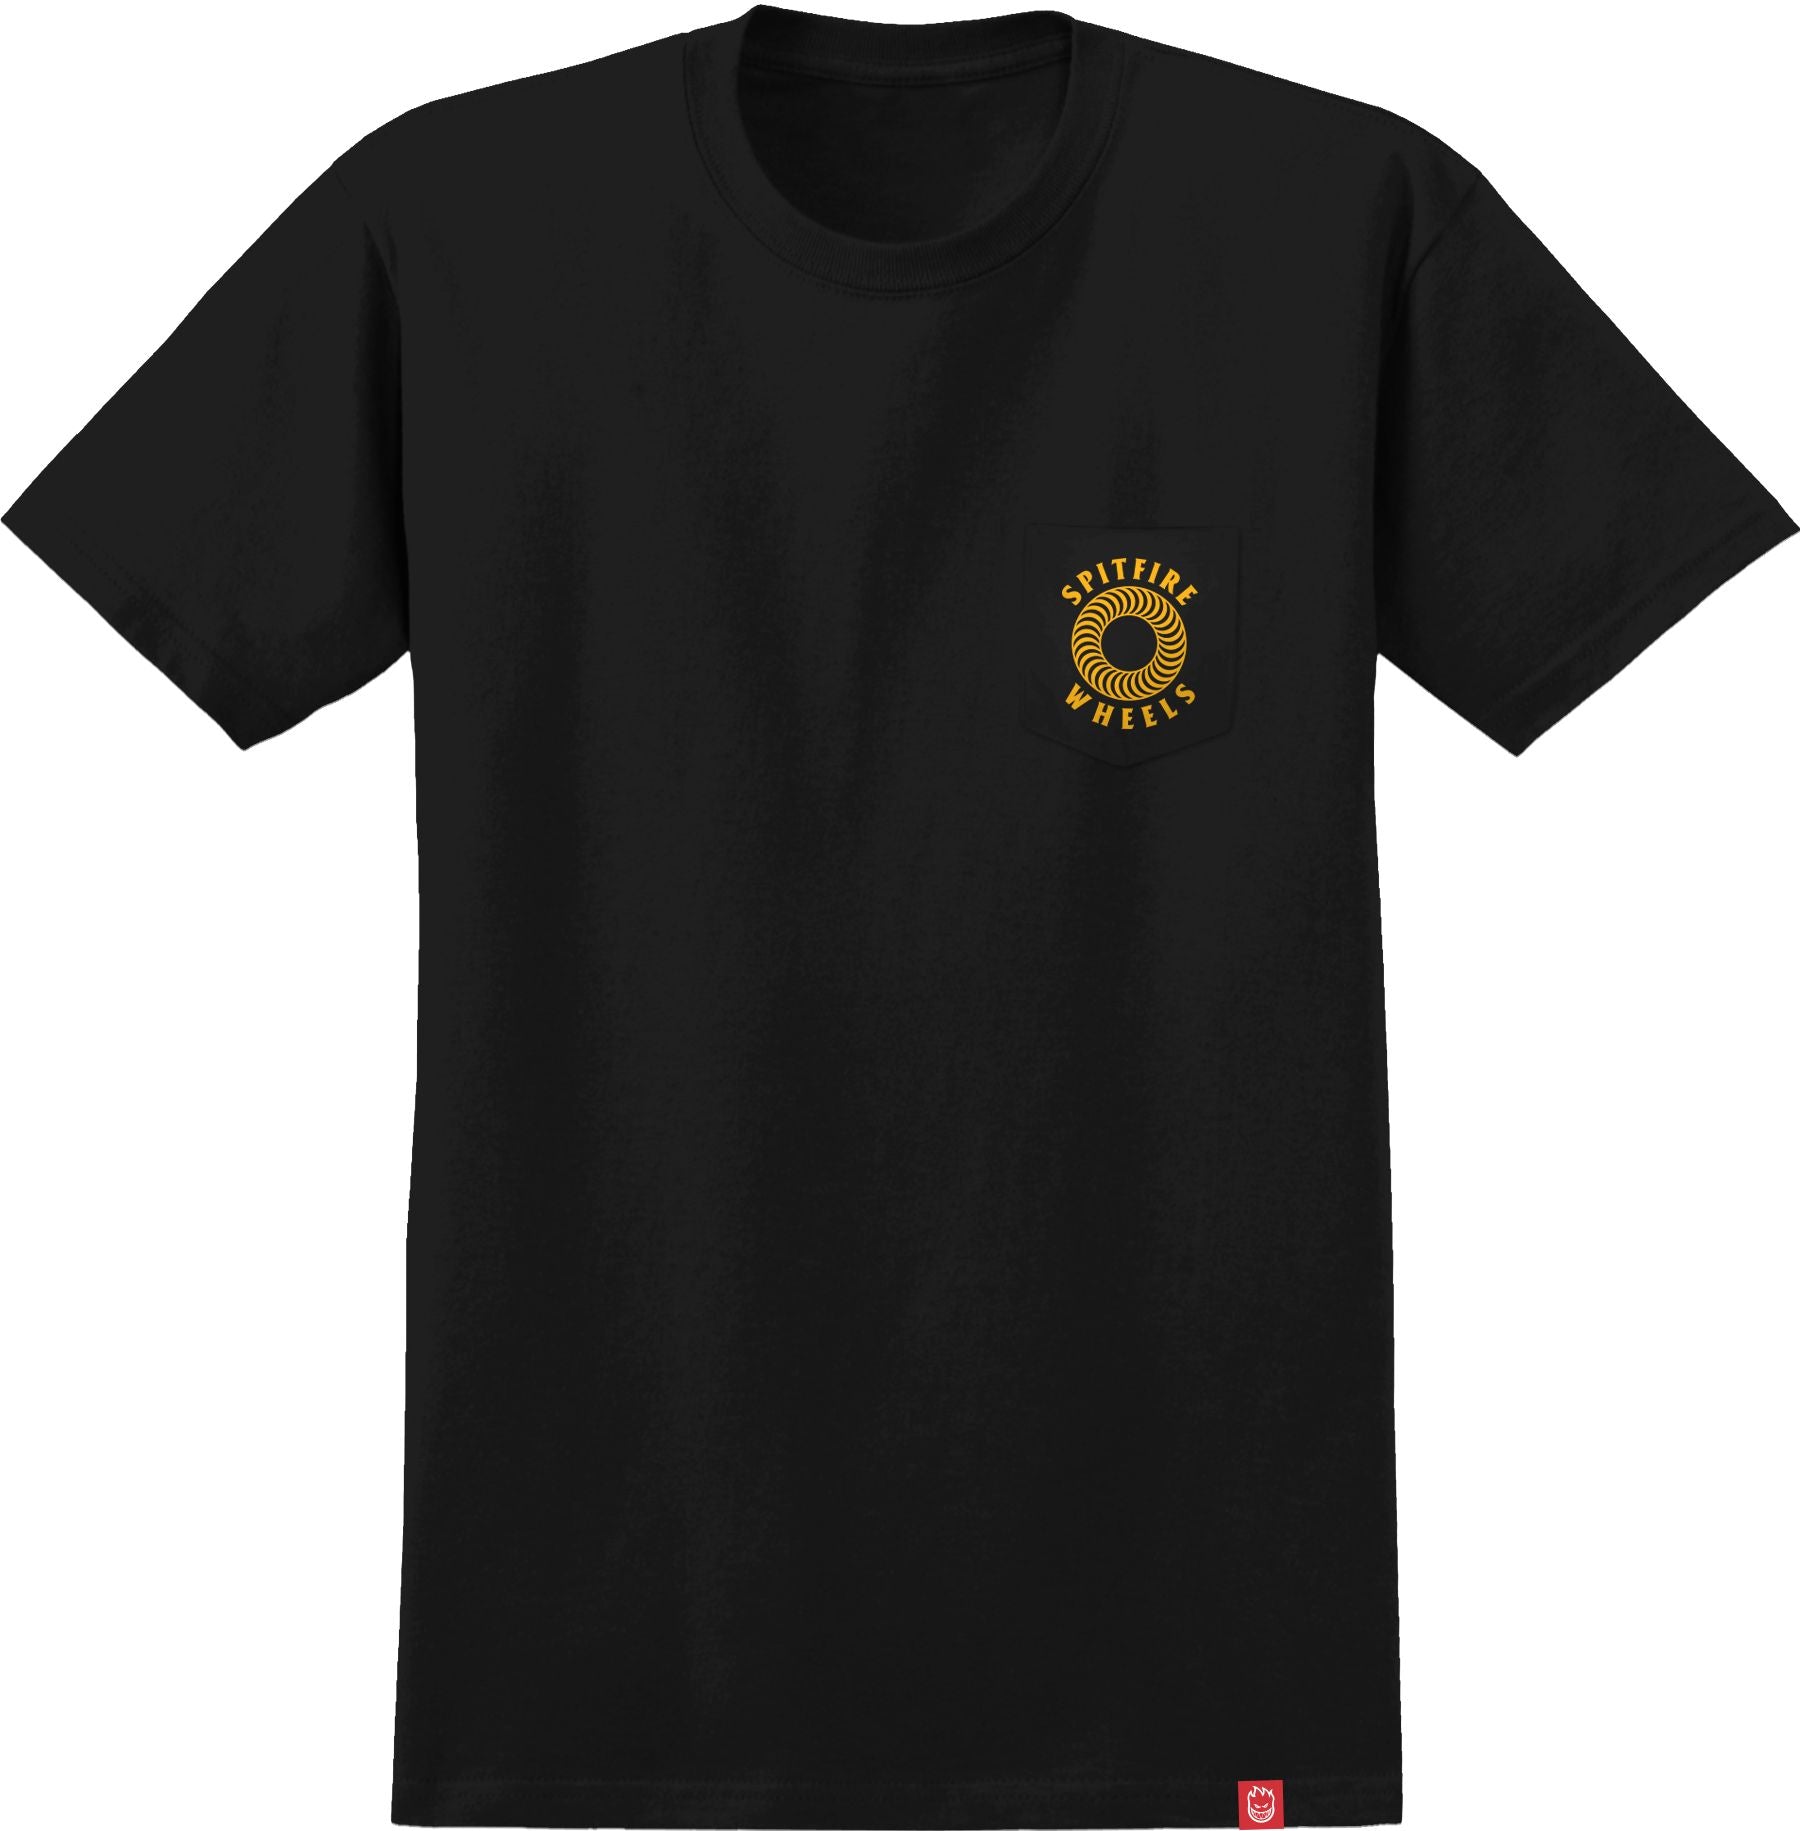 Black Classic Hollow Spitfire Pocket T-Shirt